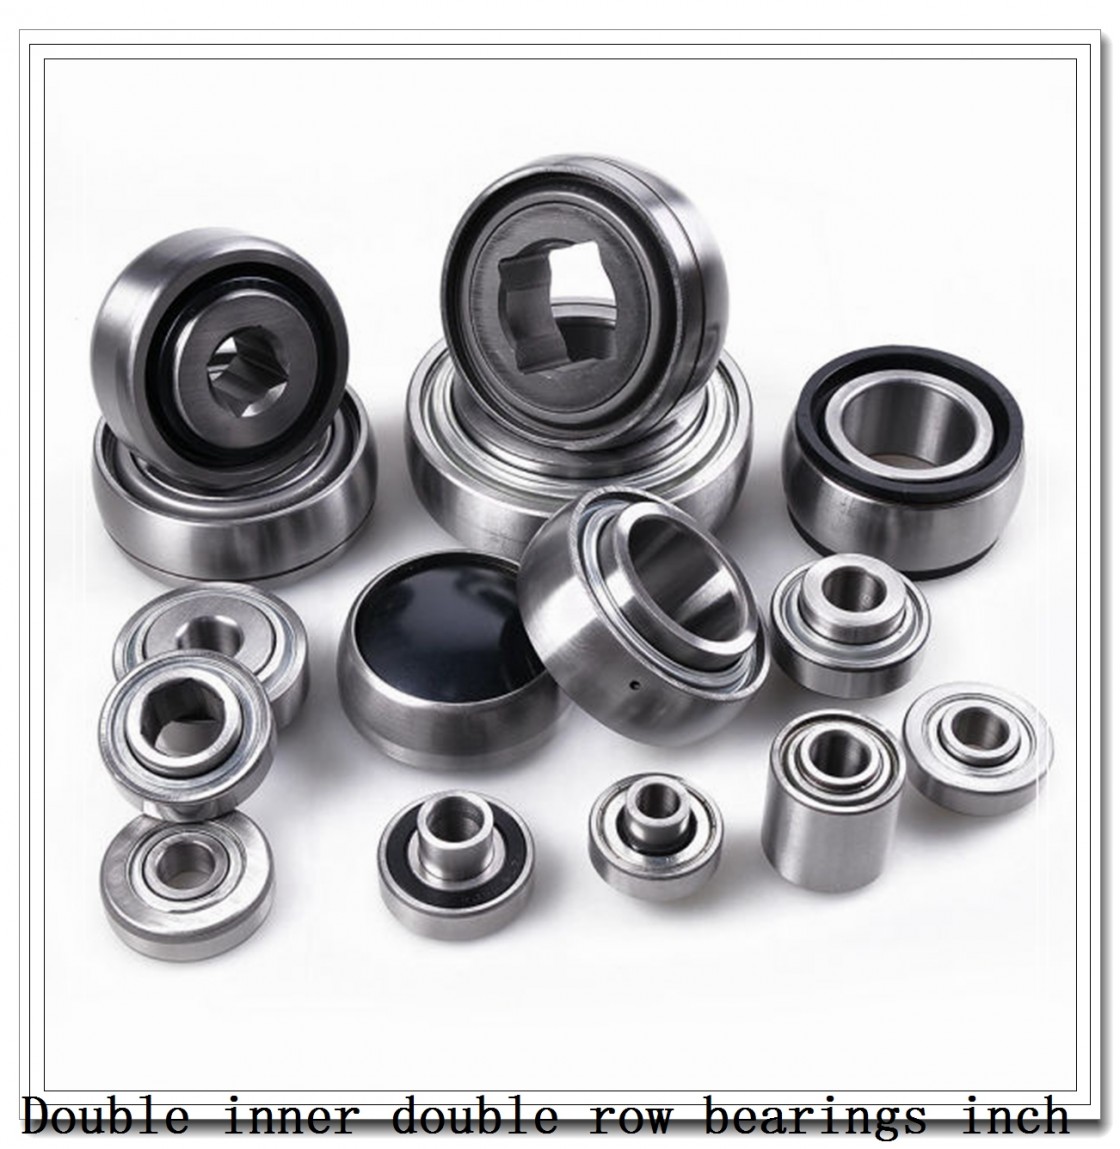 EE280626/281201D Double inner double row bearings inch